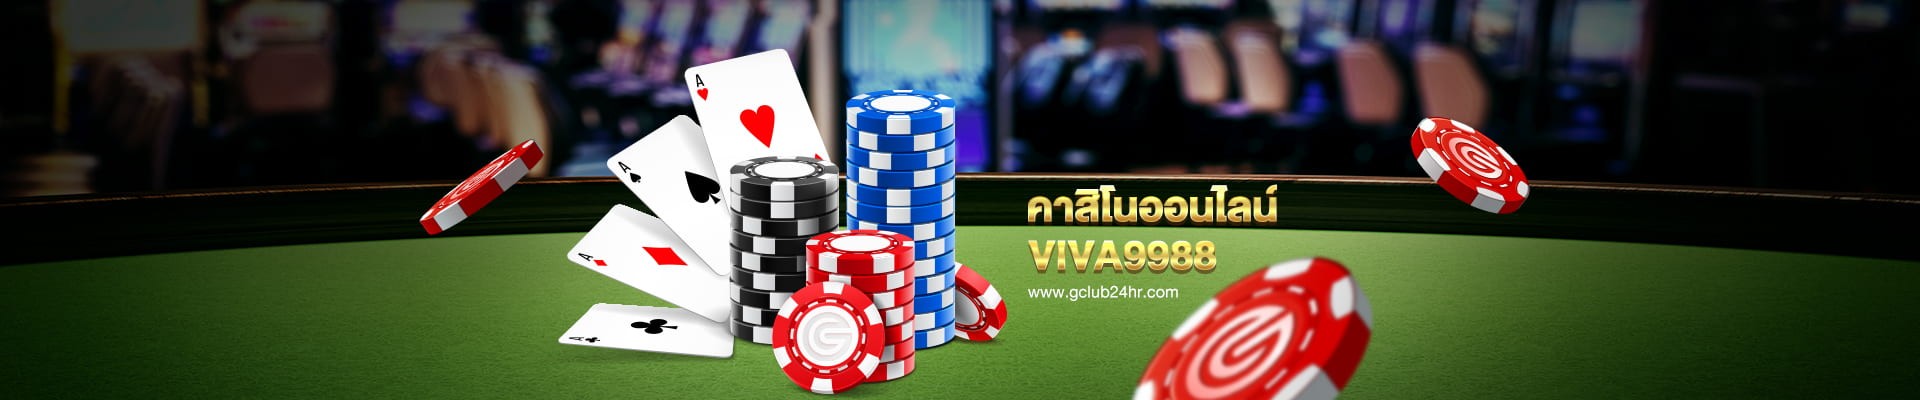 gclub24hr_casino_online_viva9988